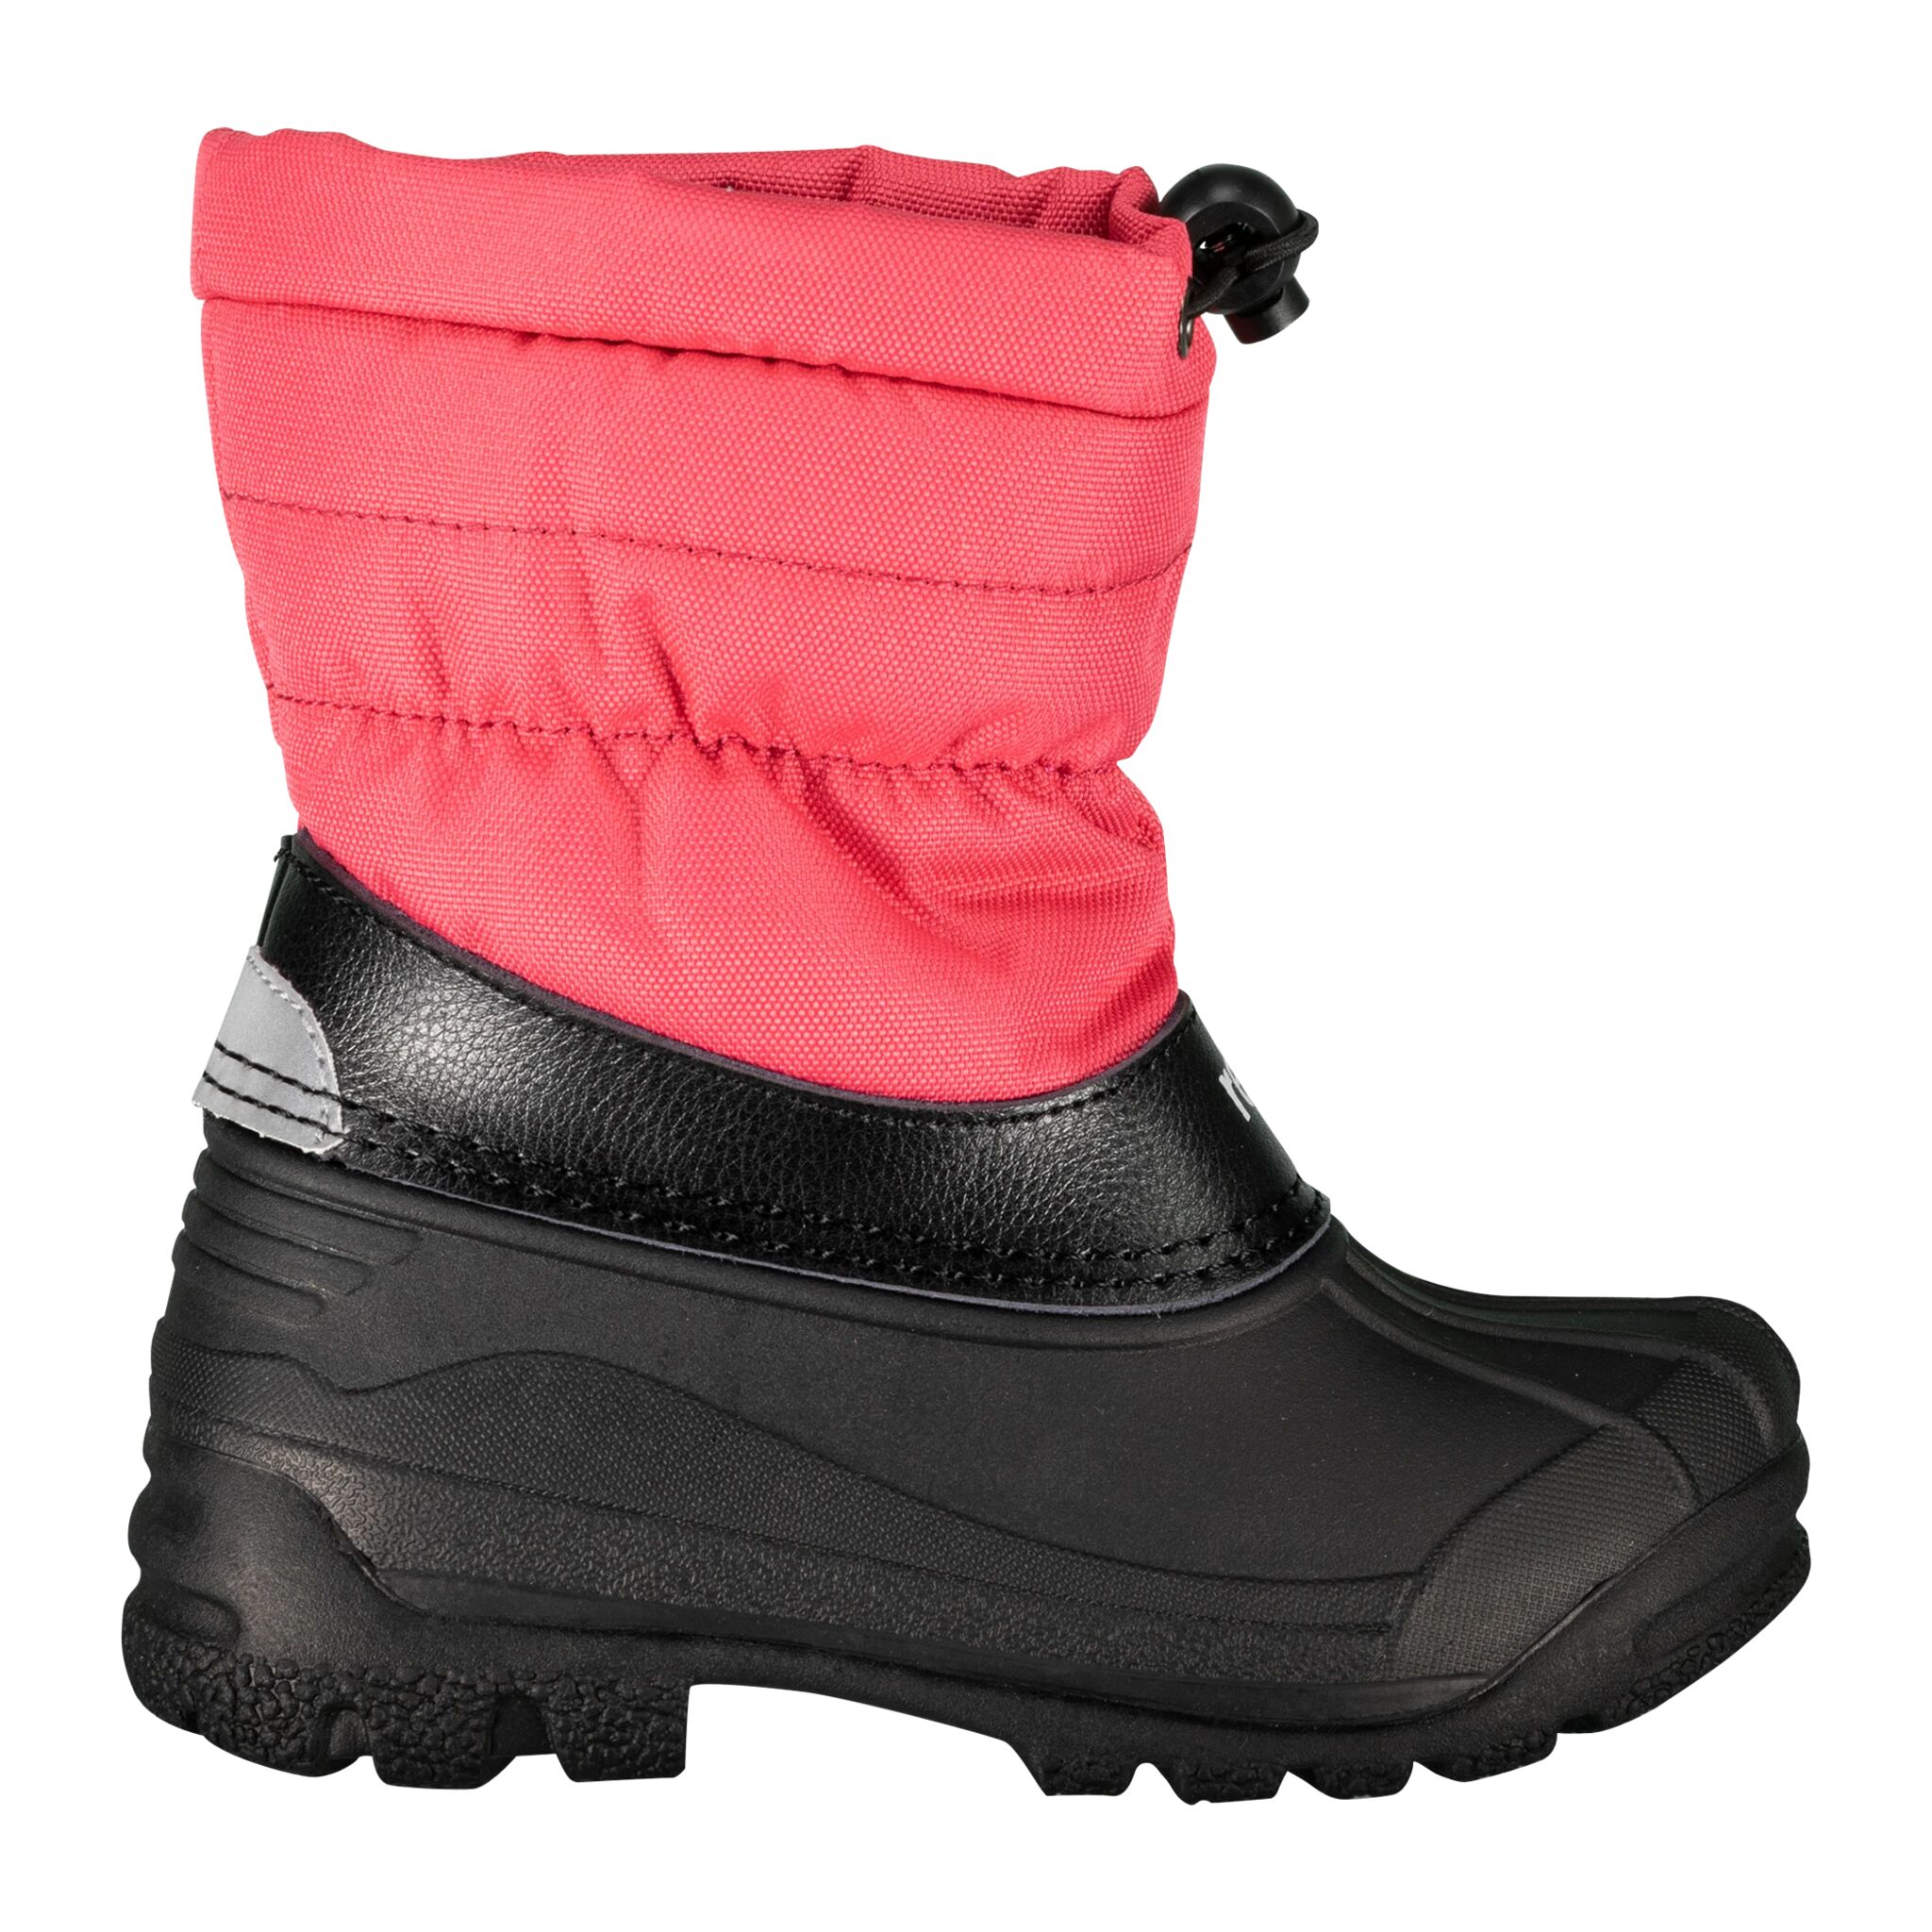 Reima Winter boots Nefar, vintersko barn 30 Azalea Pink